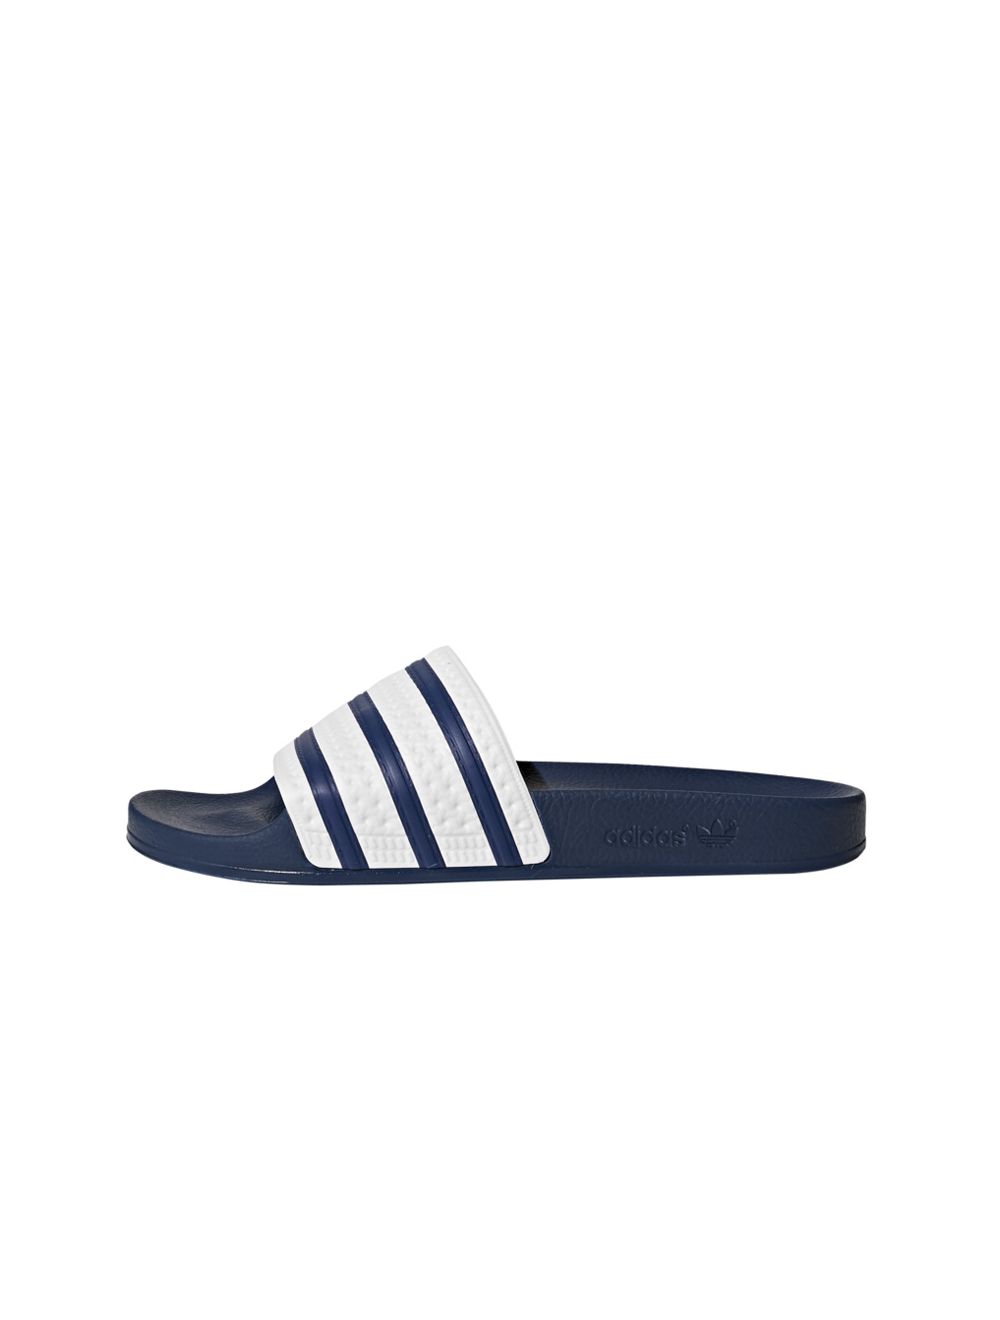 adidas Originals Adilette Slide Sandal Mens Blue White